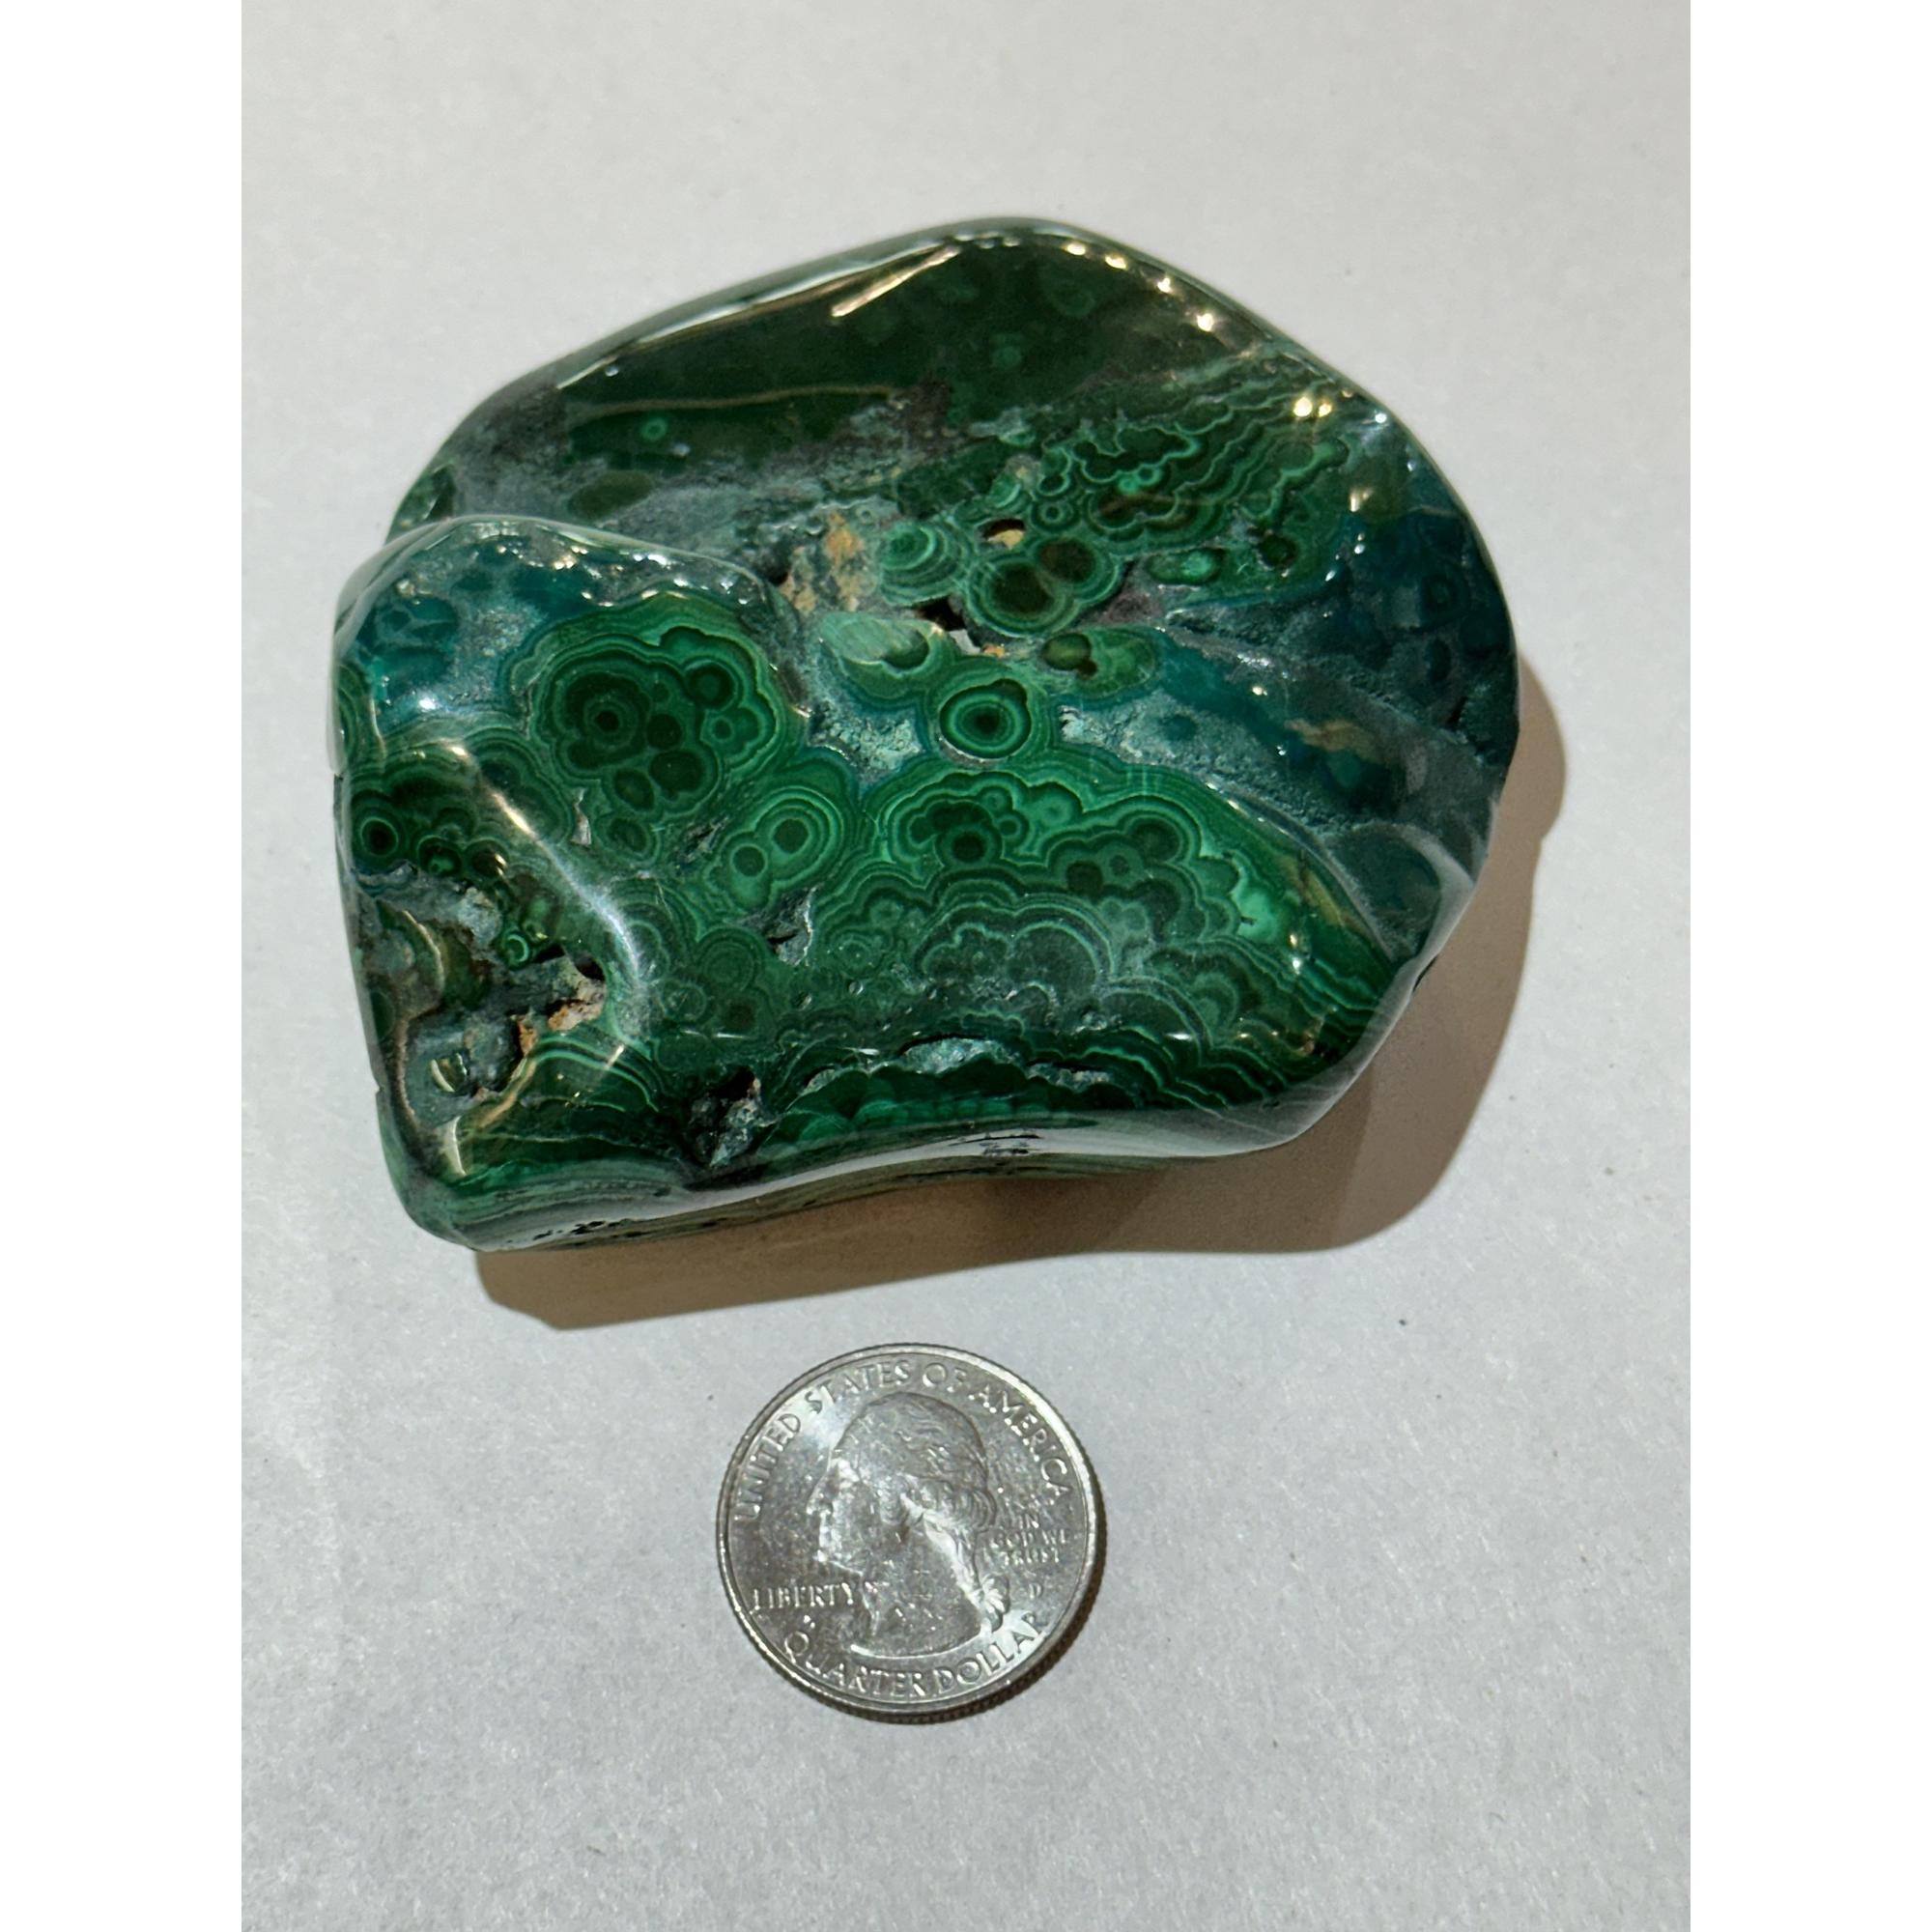 Malachite, beautiful greens, great detail Prehistoric Online